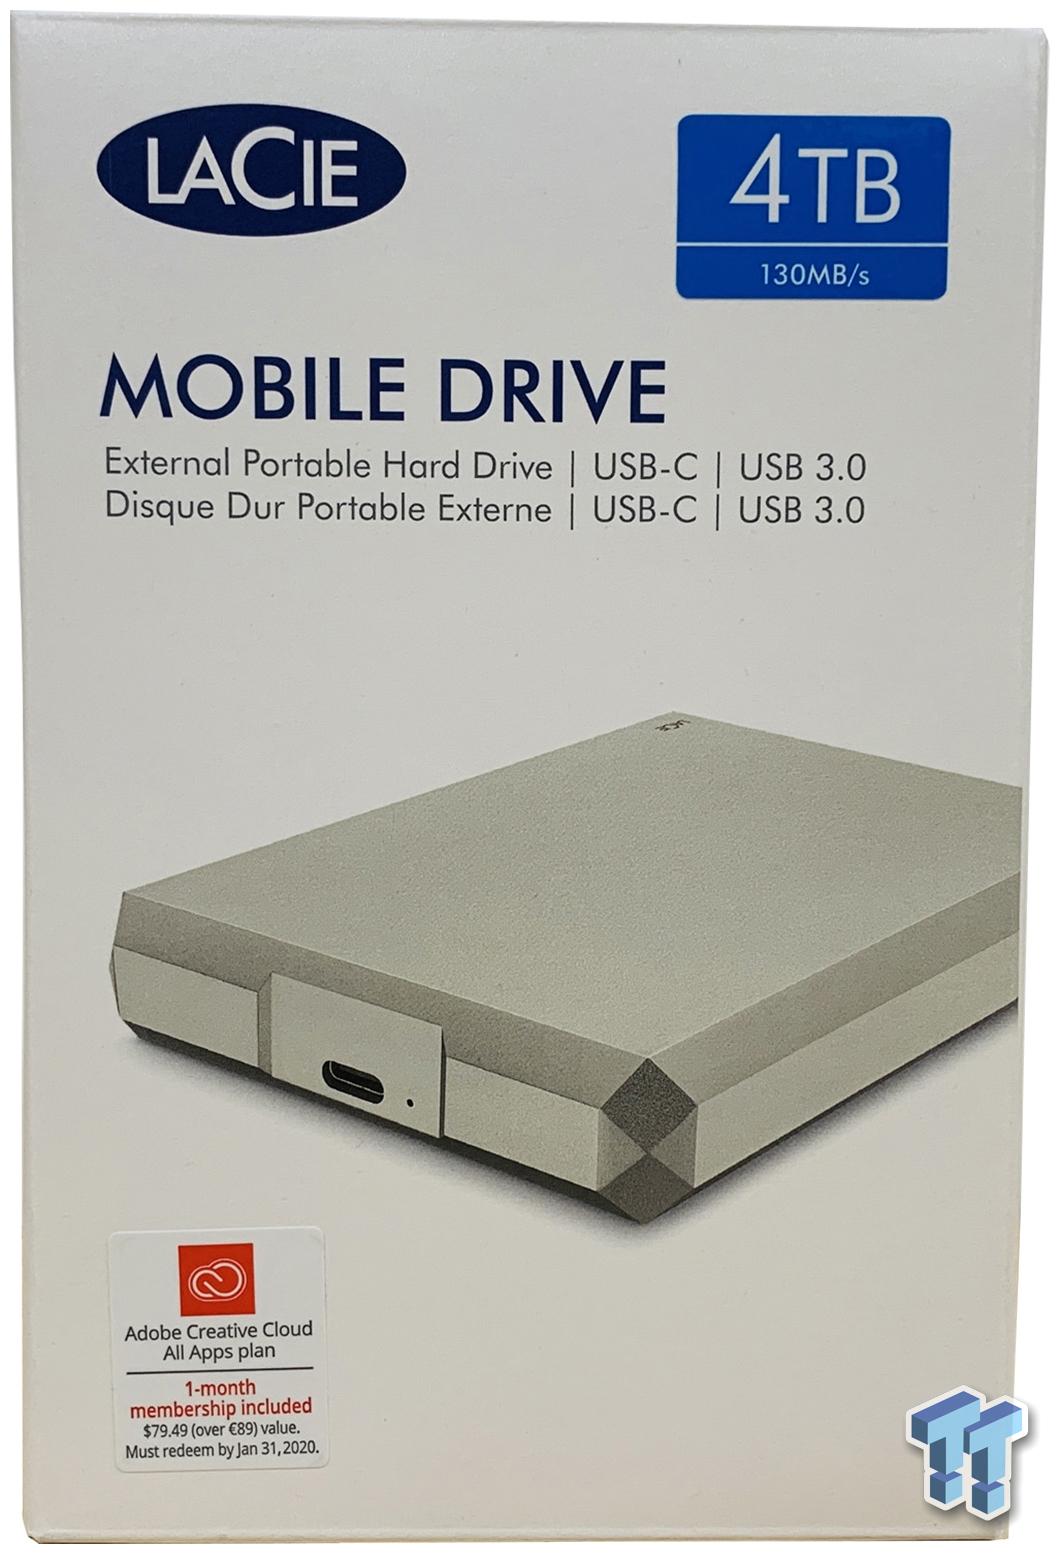 LaCie Mobile Drive 4TB Review